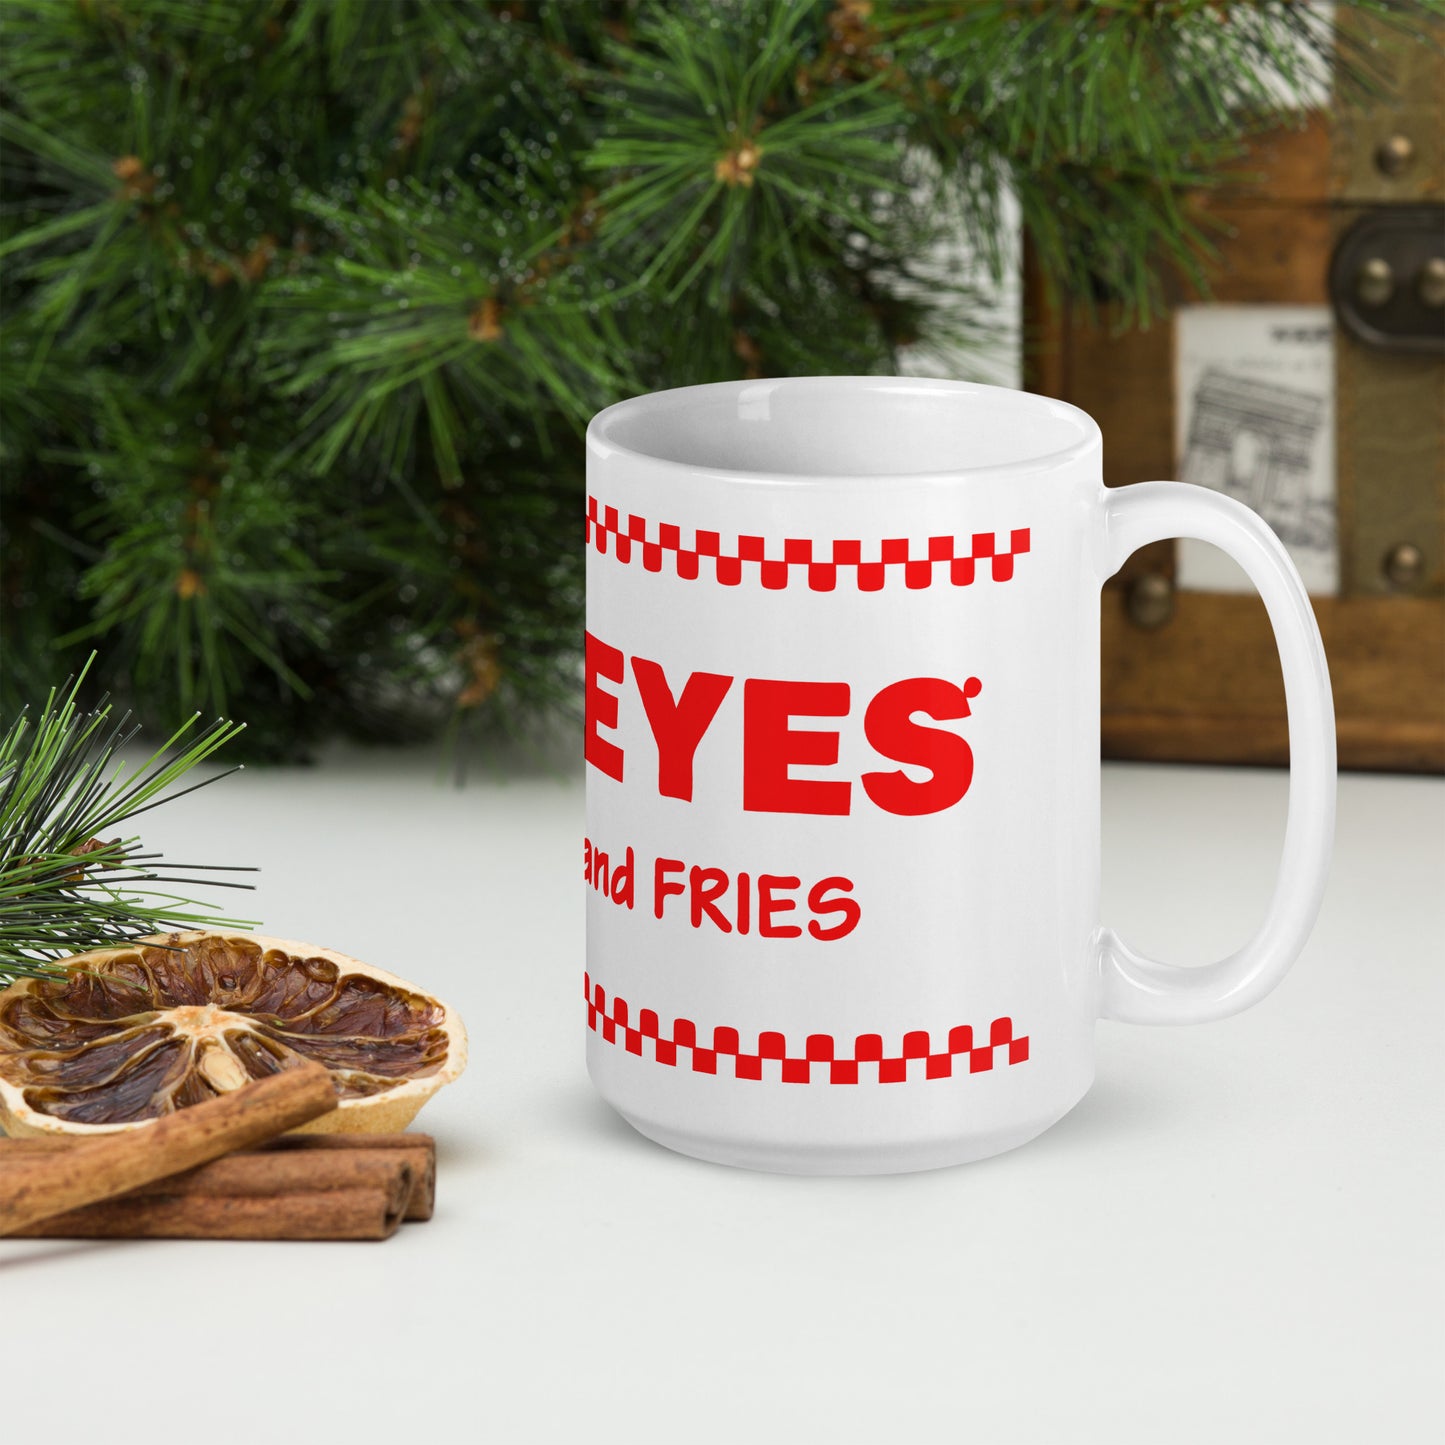 Five Eyes Burgers and Fries White glossy mug